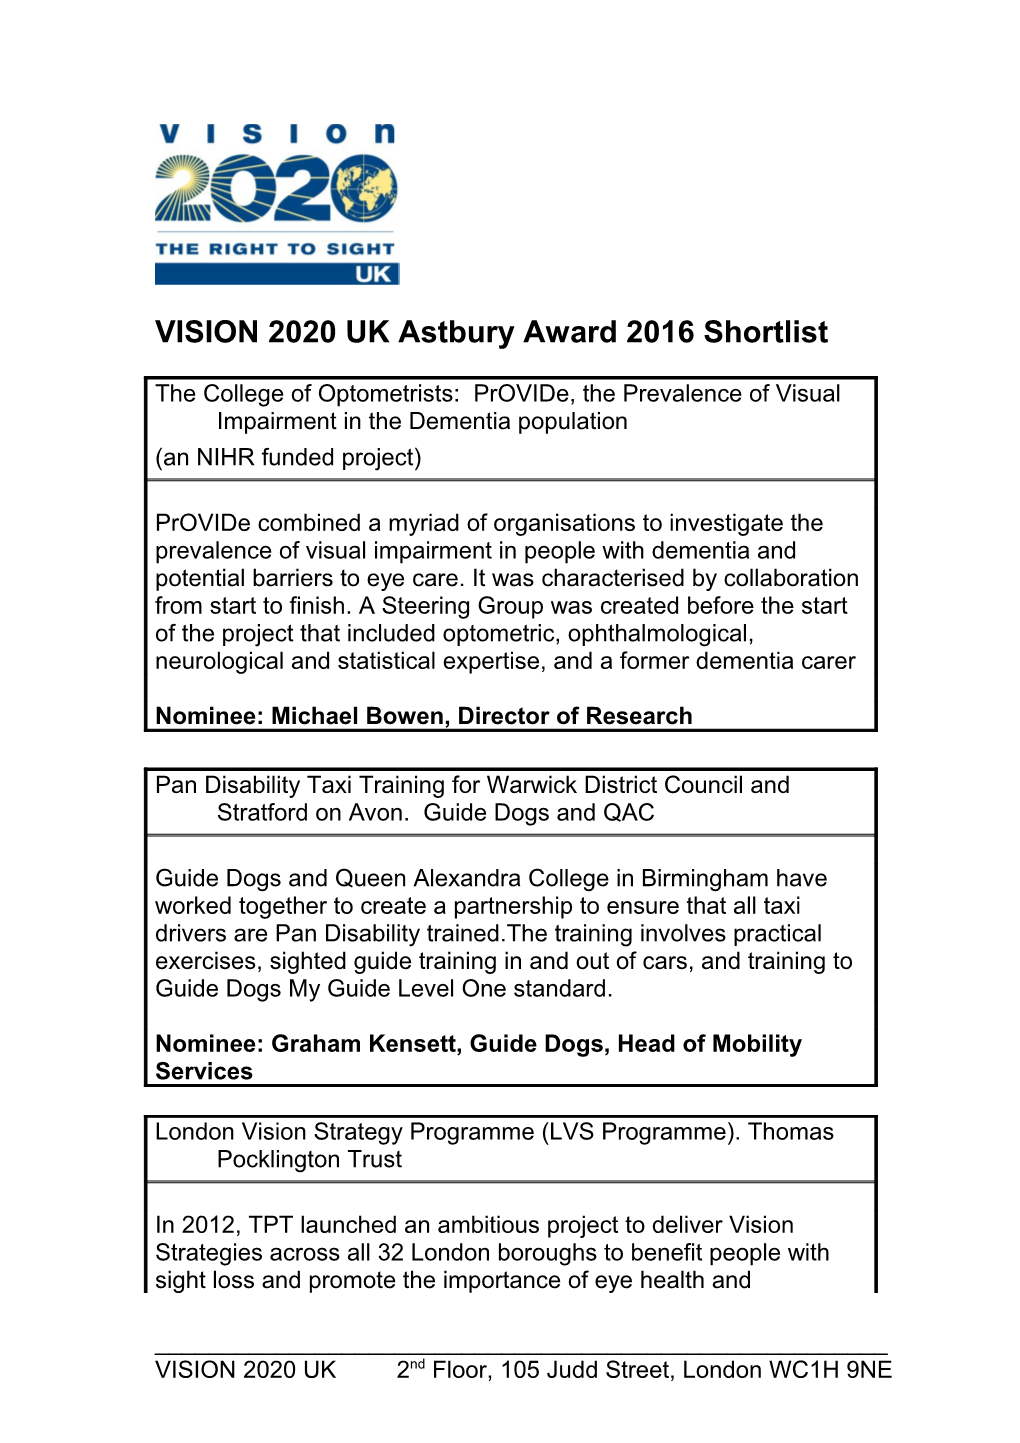 VISION 2020 Ukastbury Award 2016 Shortlist